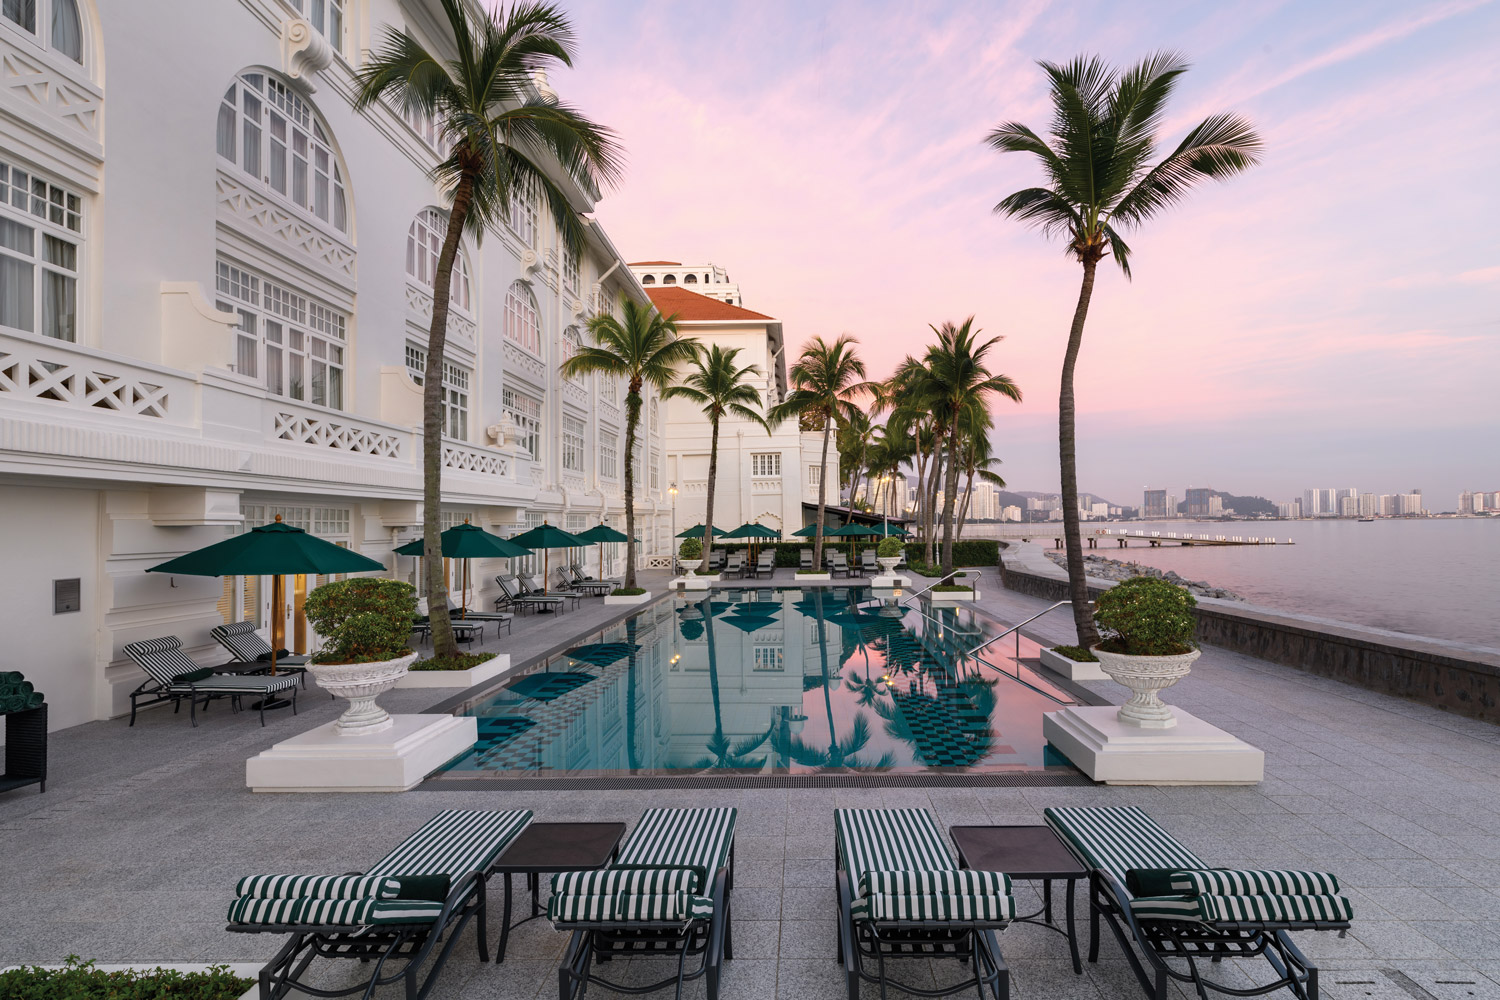 Eastern & Oriental Hotel: The Gold List 2022 - Best Luxury Hotel